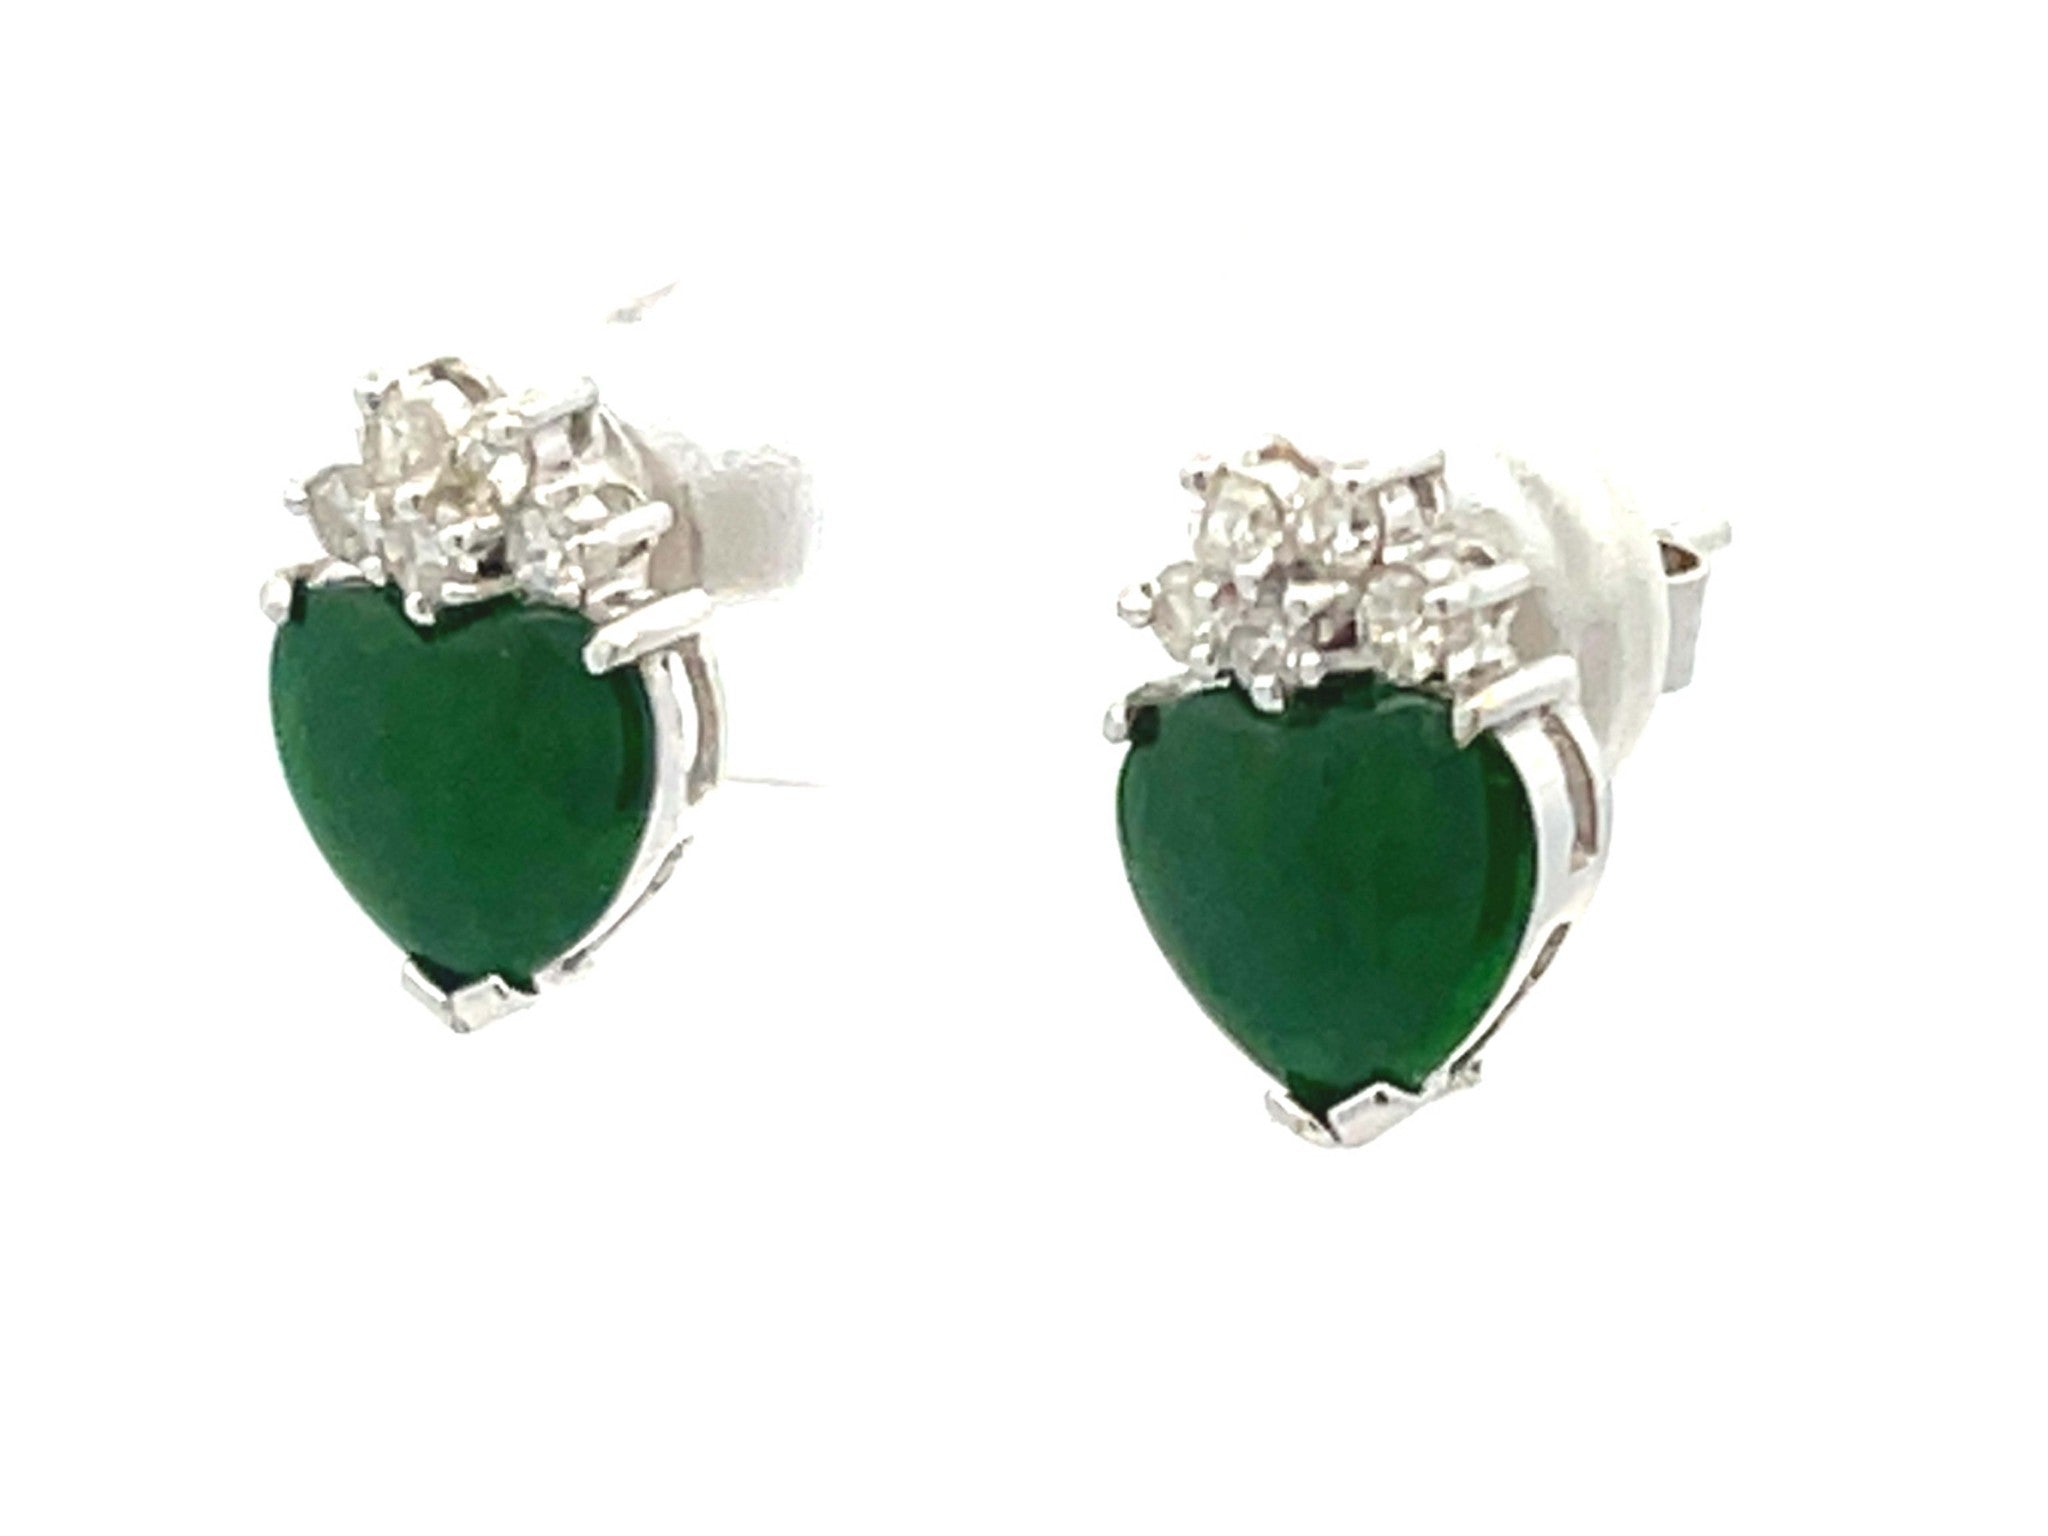 Imperial Jade Heart and Diamond Stud Earrings in 18K White Gold